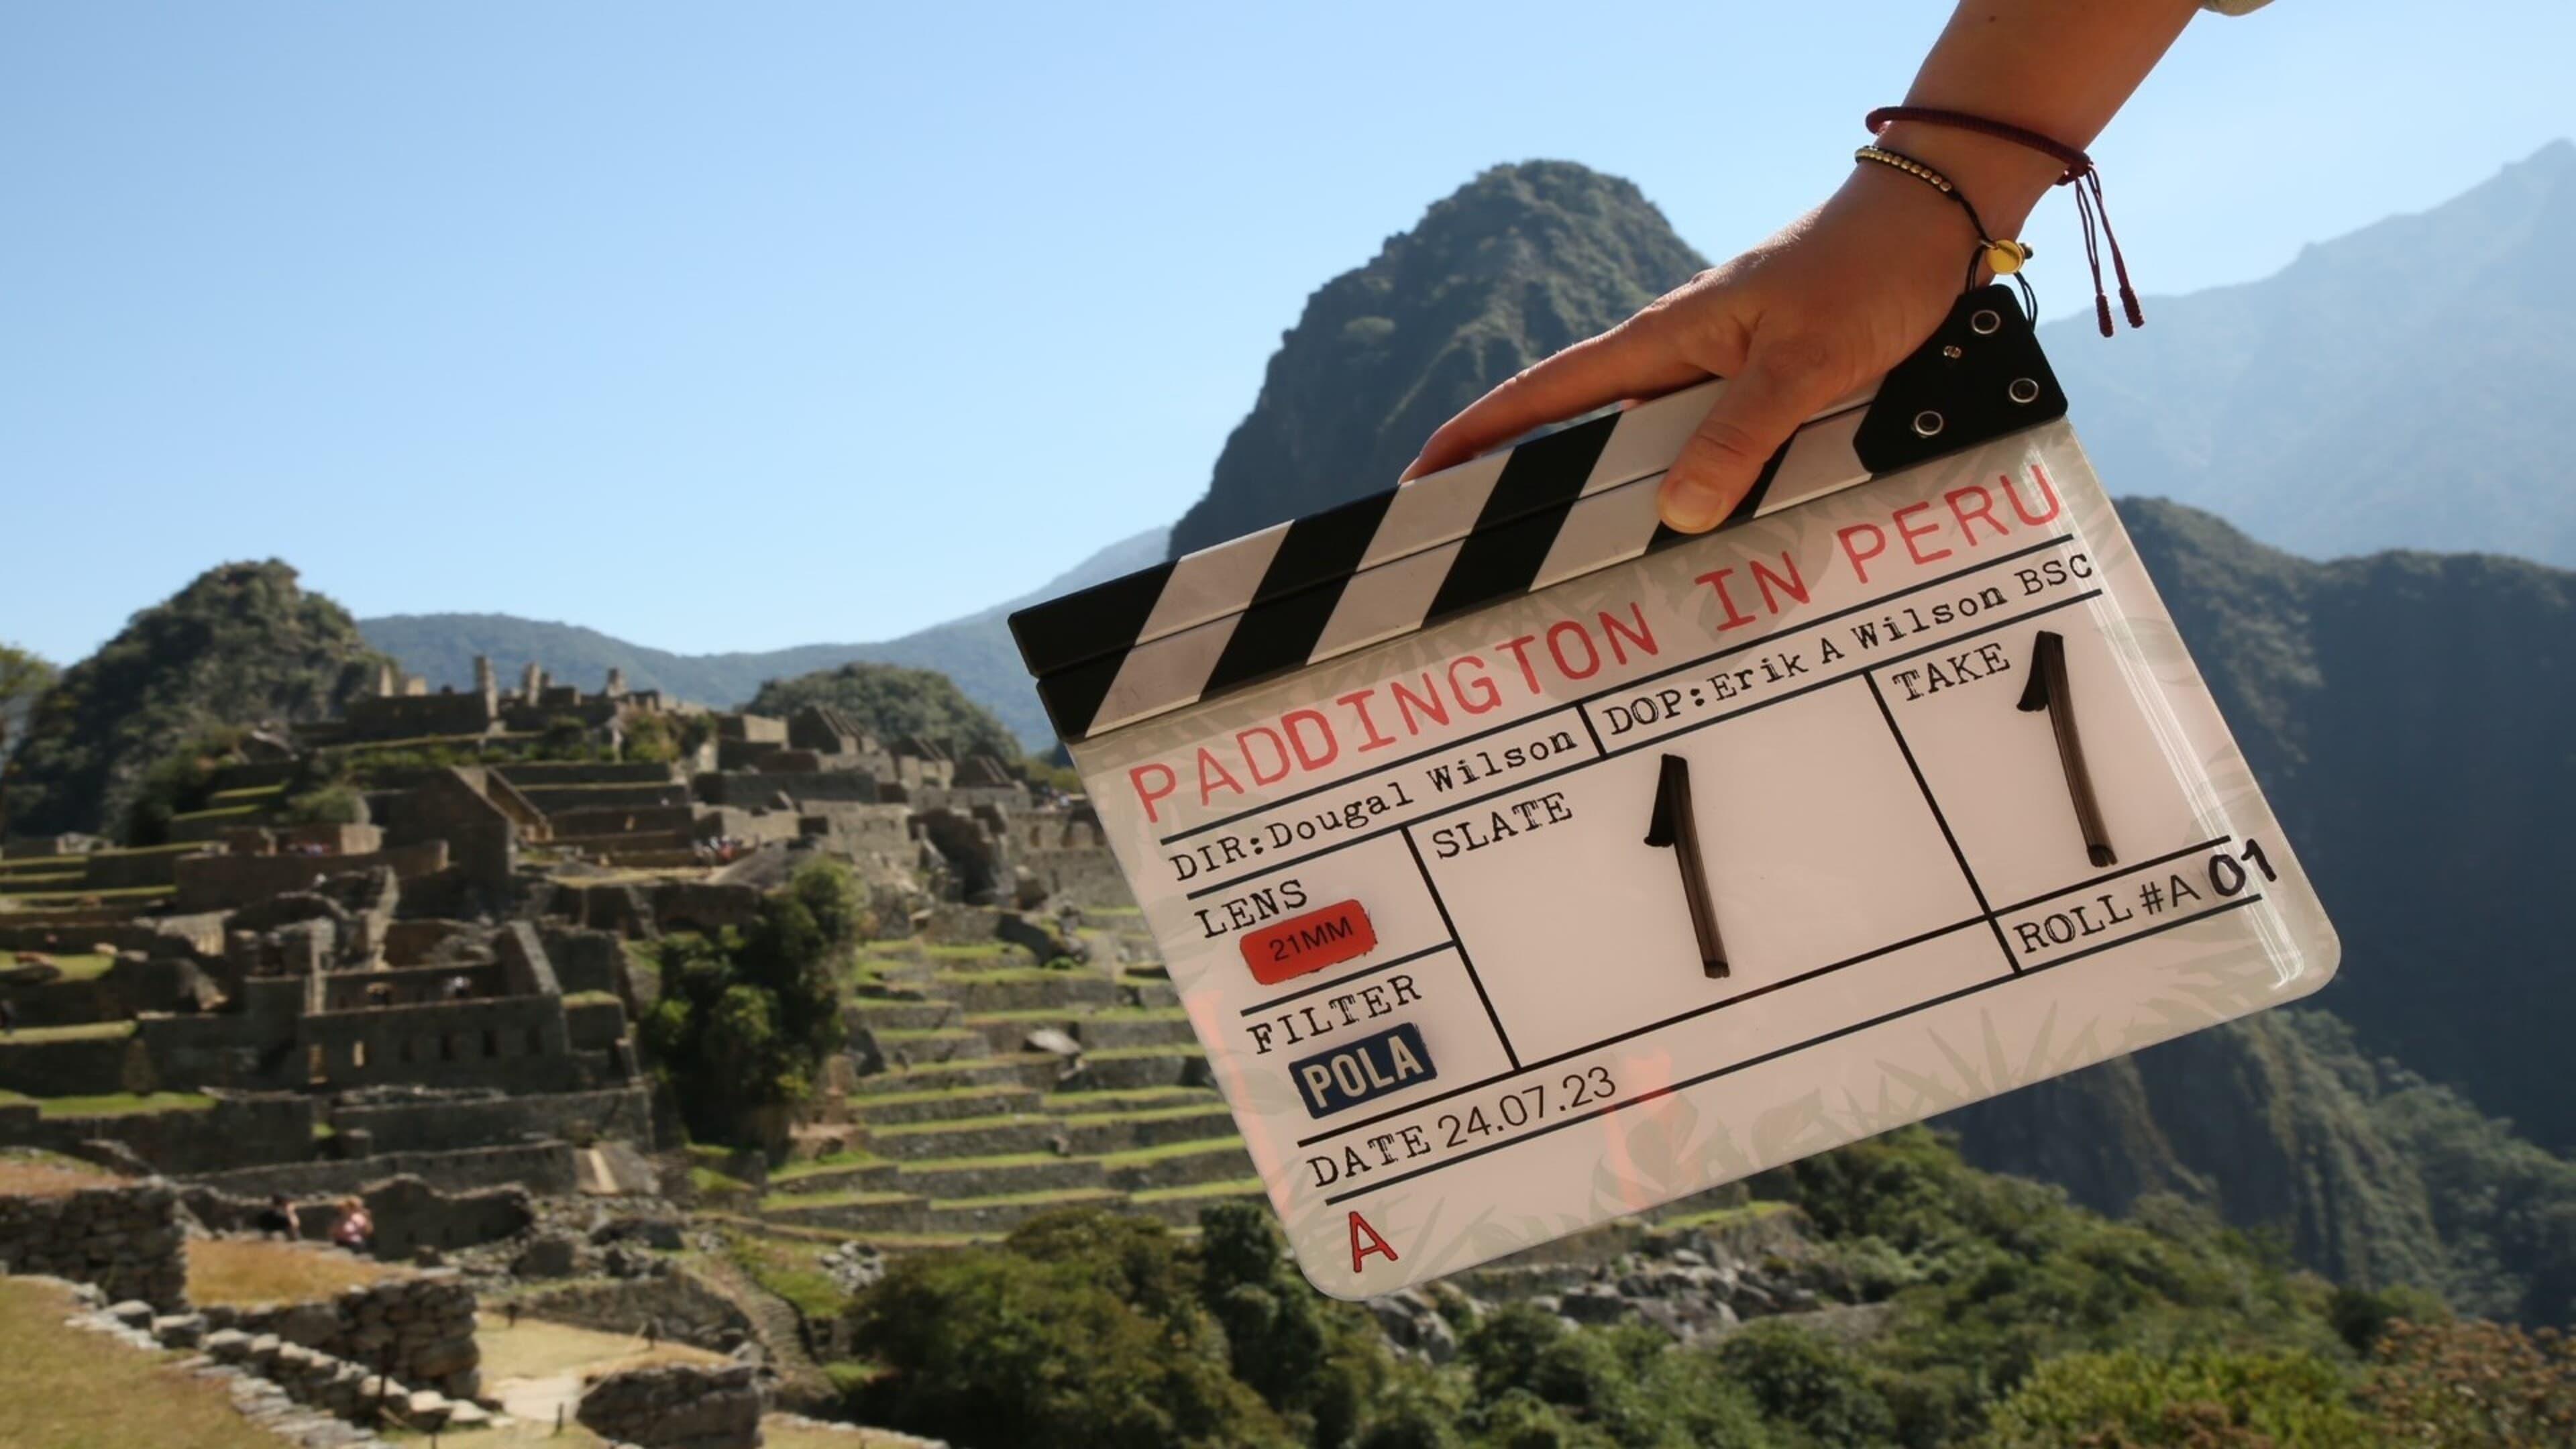 Paddington in Peru backdrop